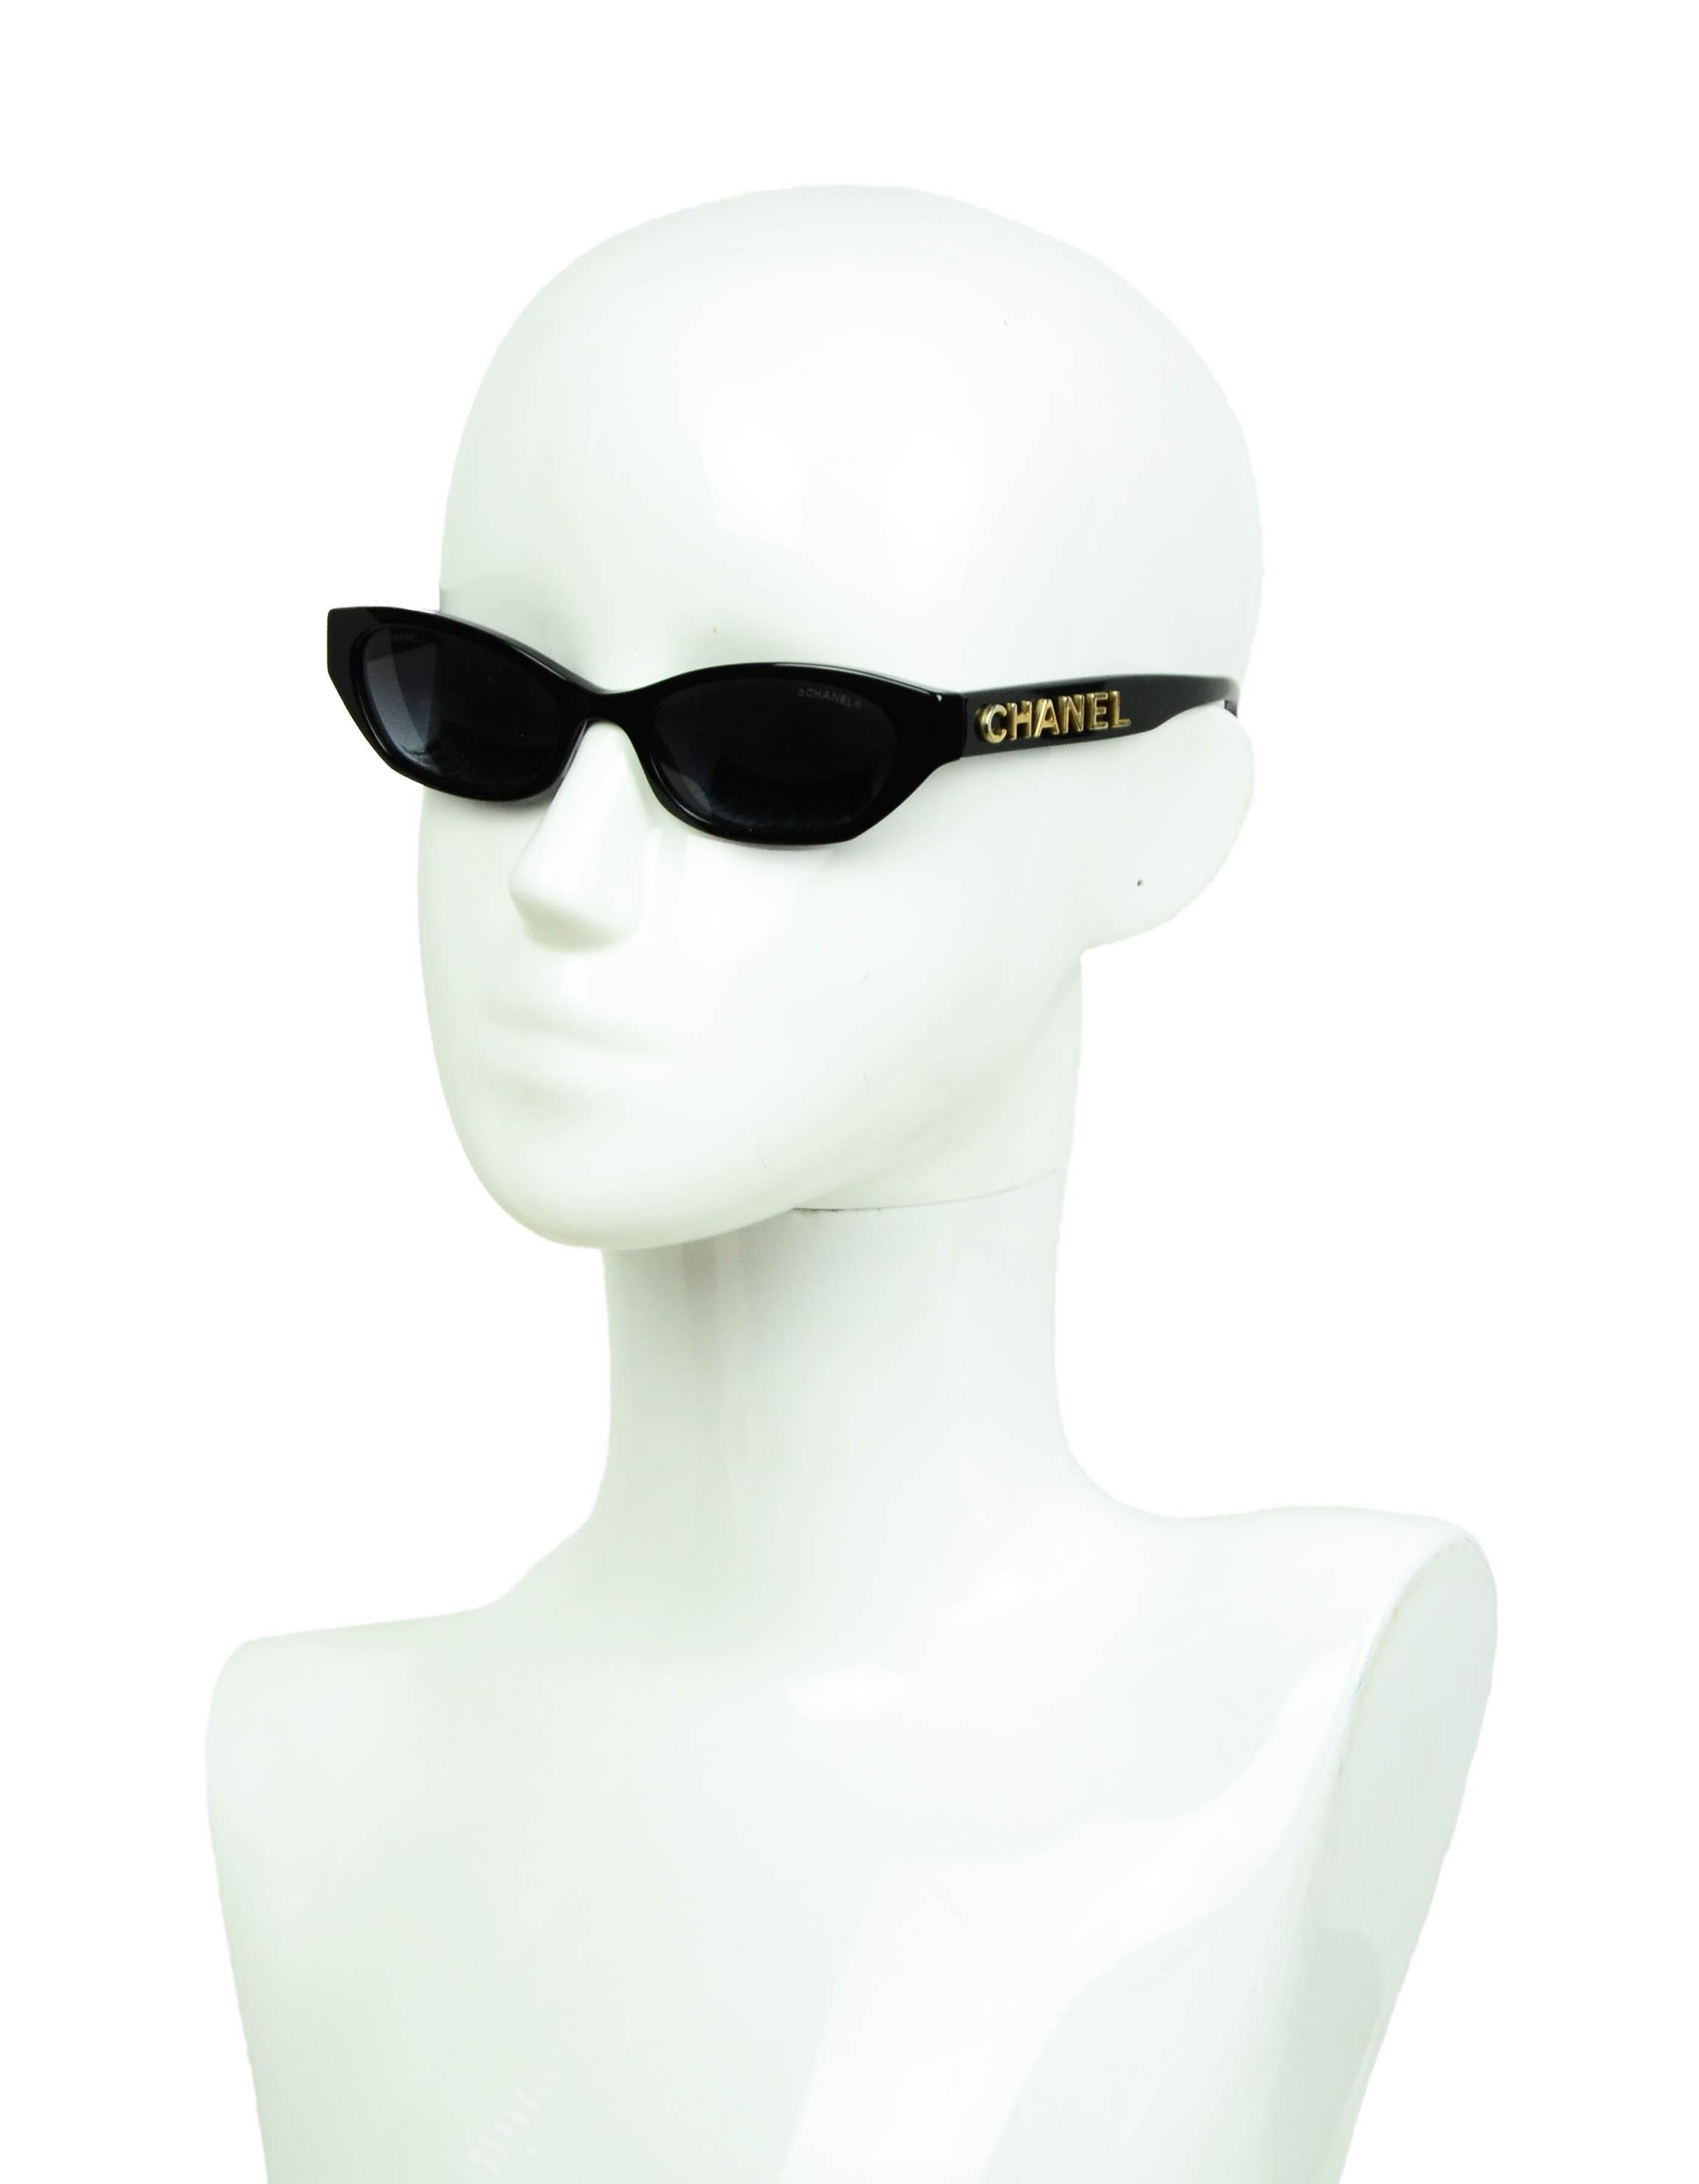 Chanel 2018 Sunglasses Black Slim Shield Rectangle Letters 5415 c501S6  200423  eBay